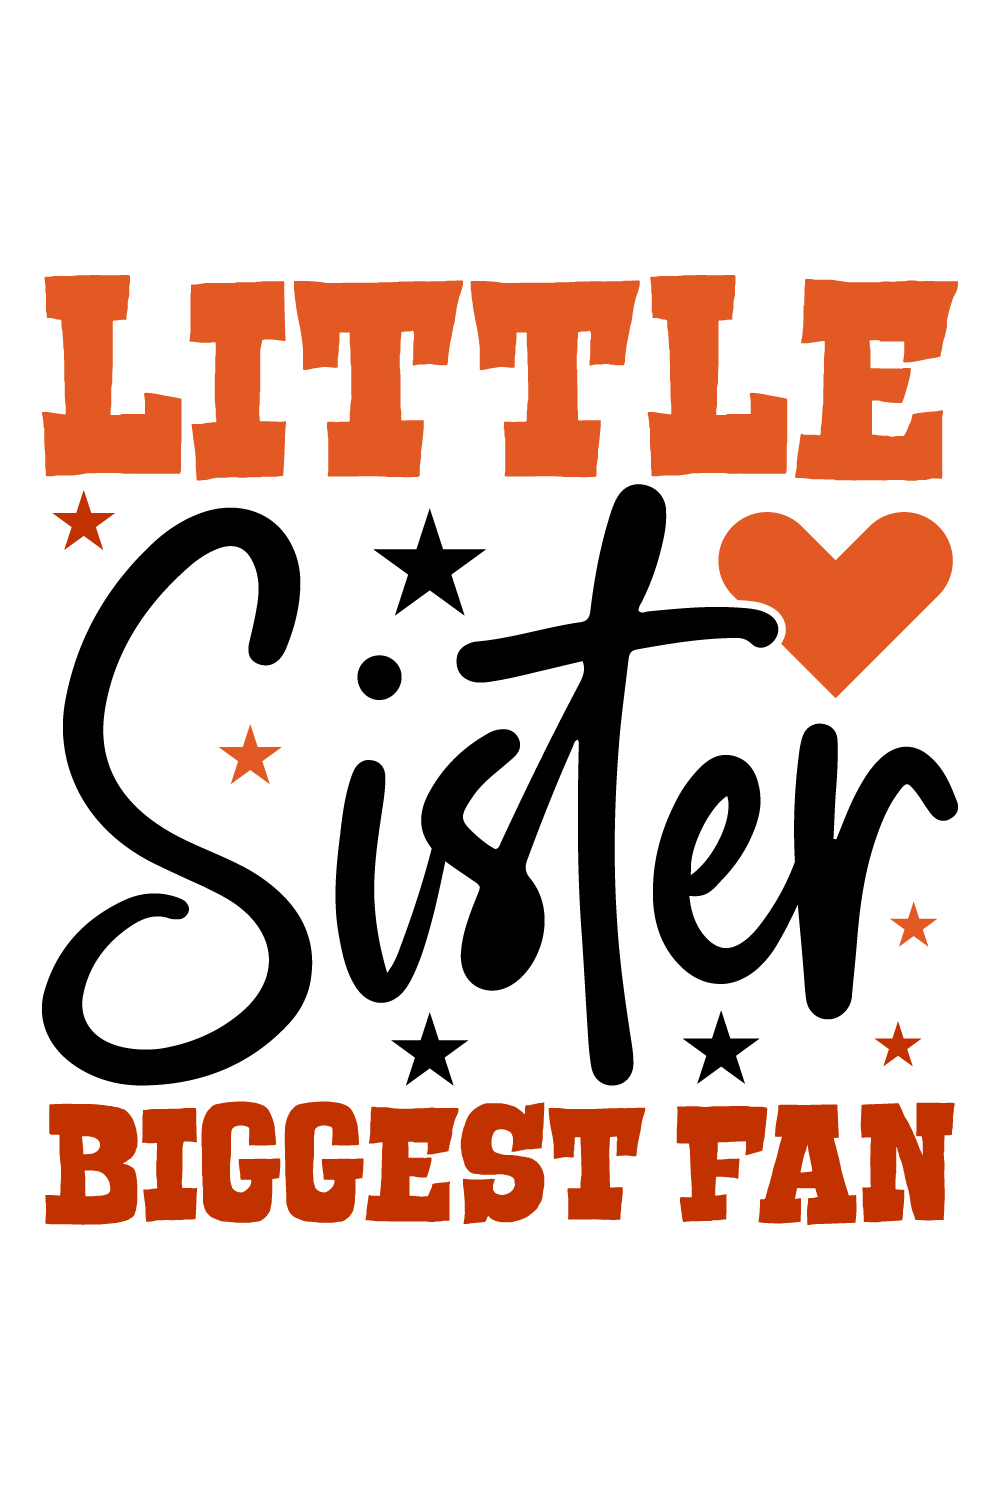 Little Sister Biggest Fan pinterest preview image.